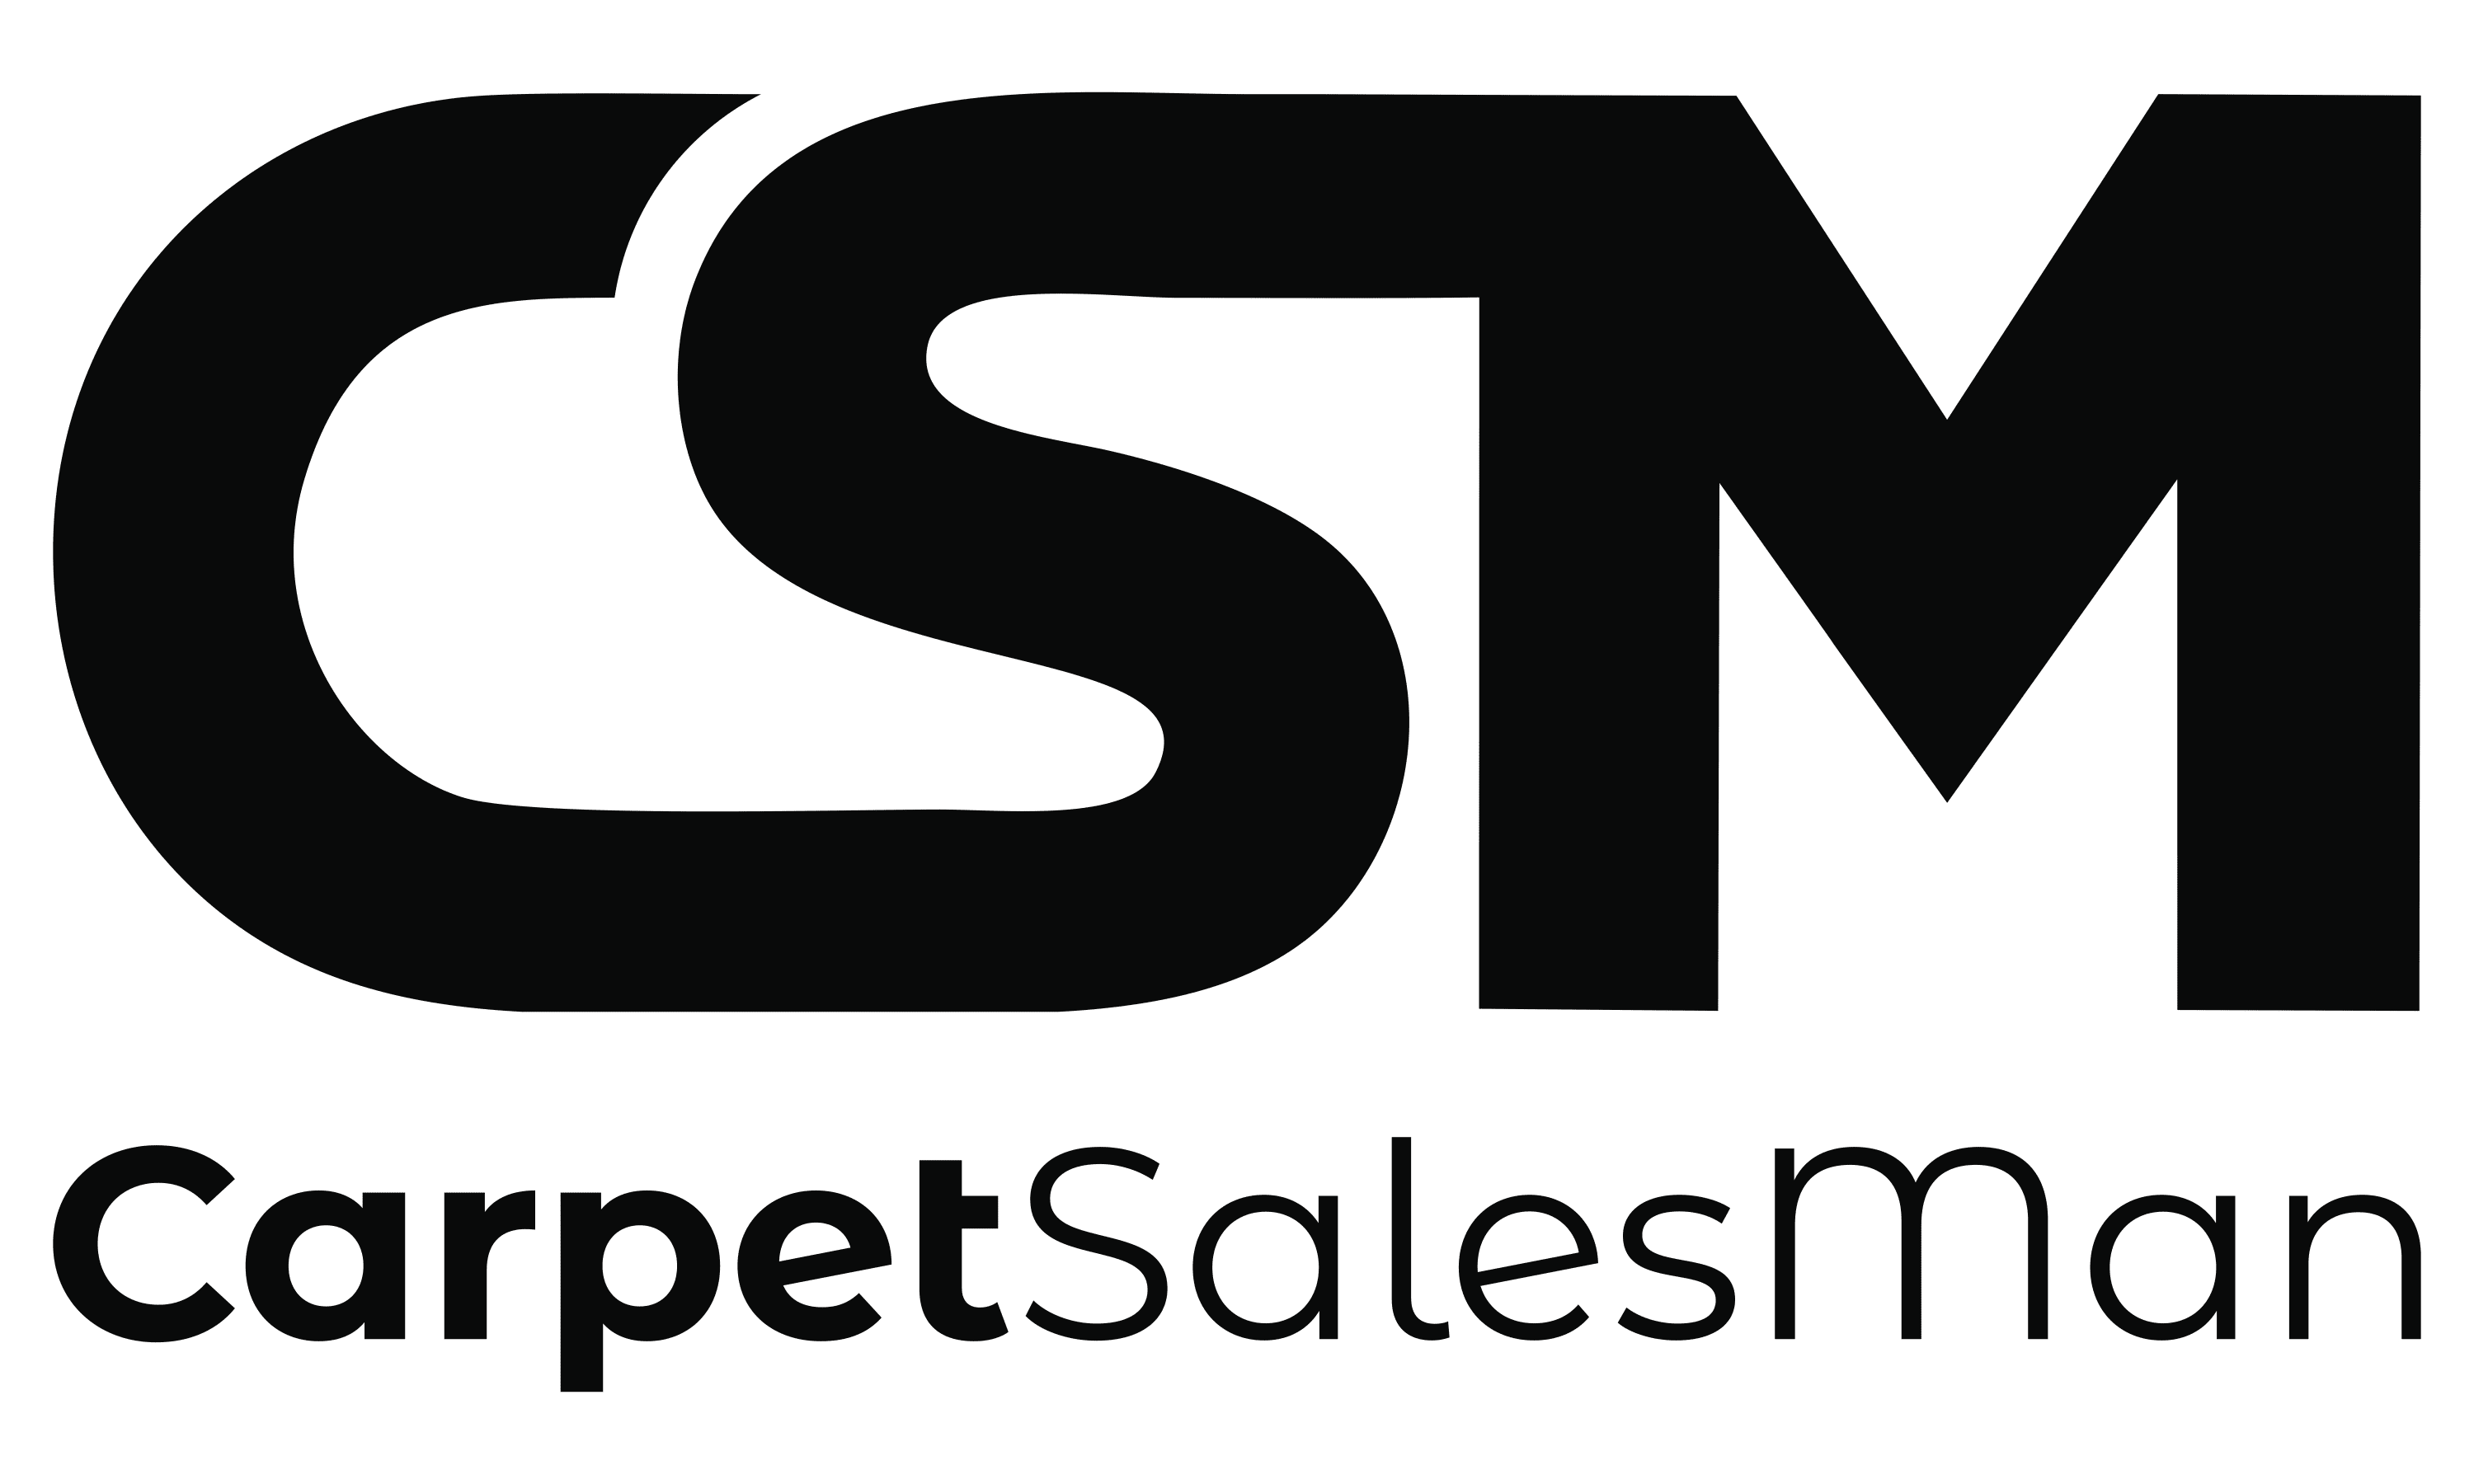 Carpet Sales Man